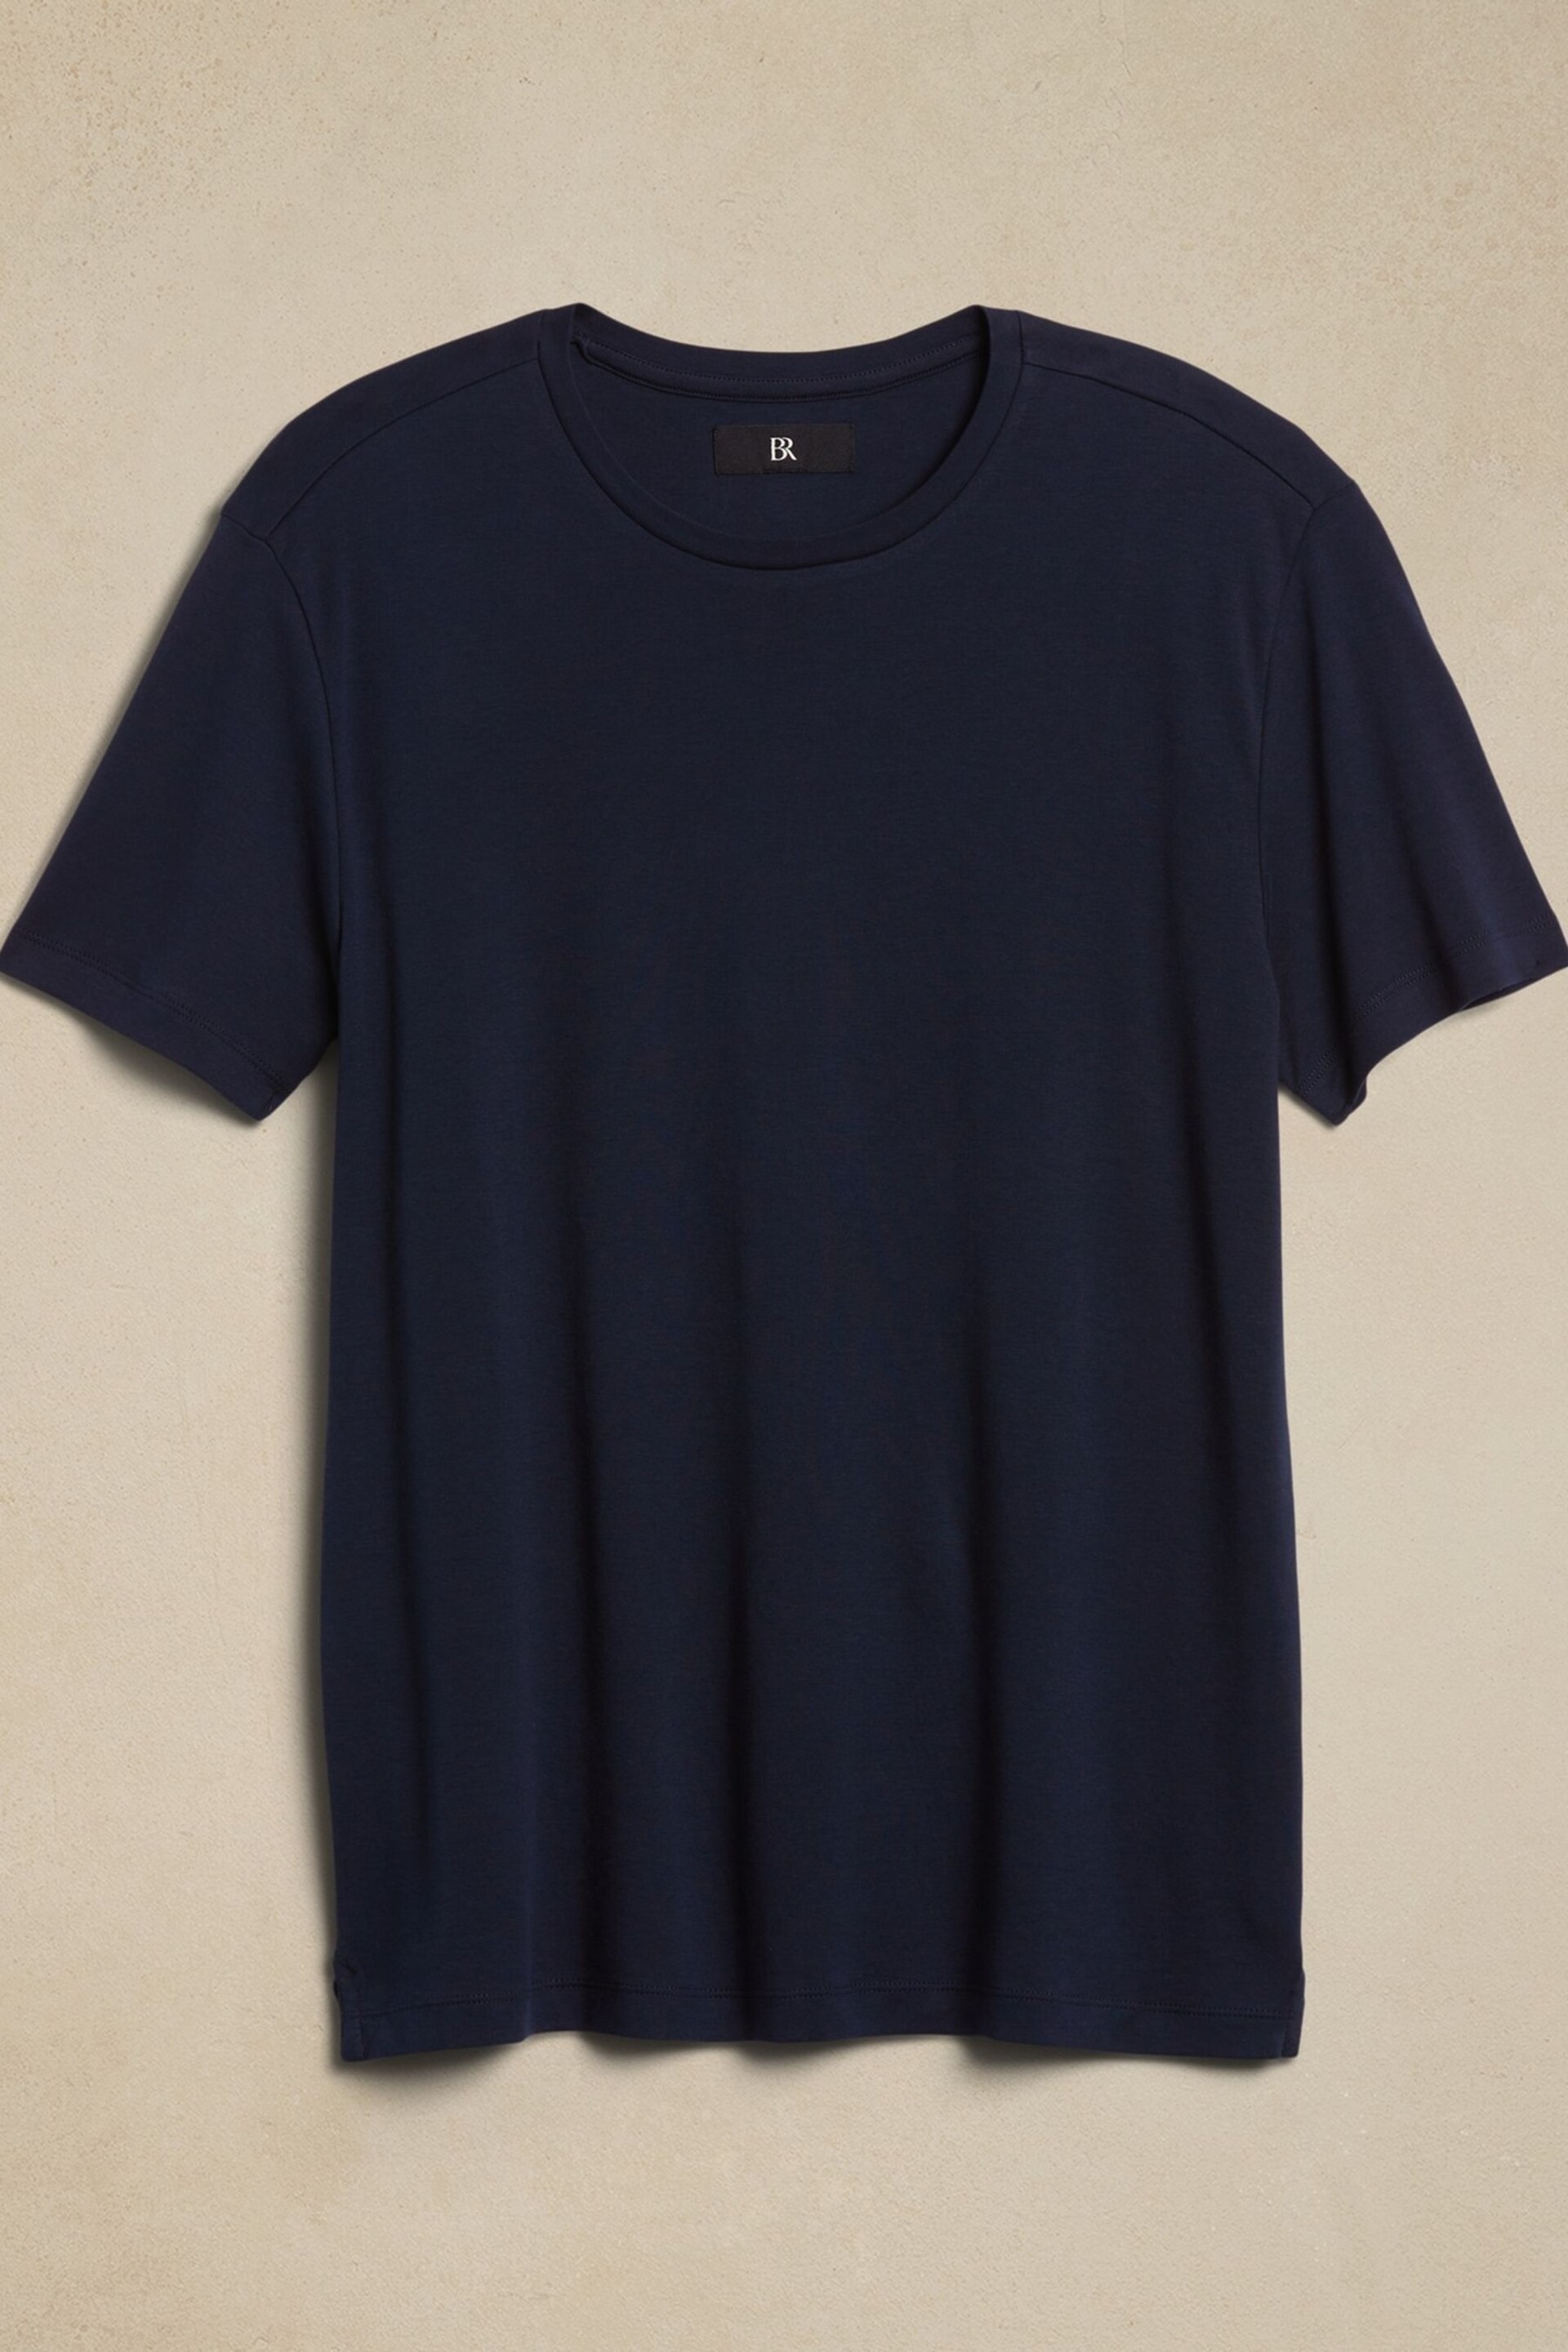 Banana Republic Blue Luxury-Touch T-Shirt - Image 4 of 4